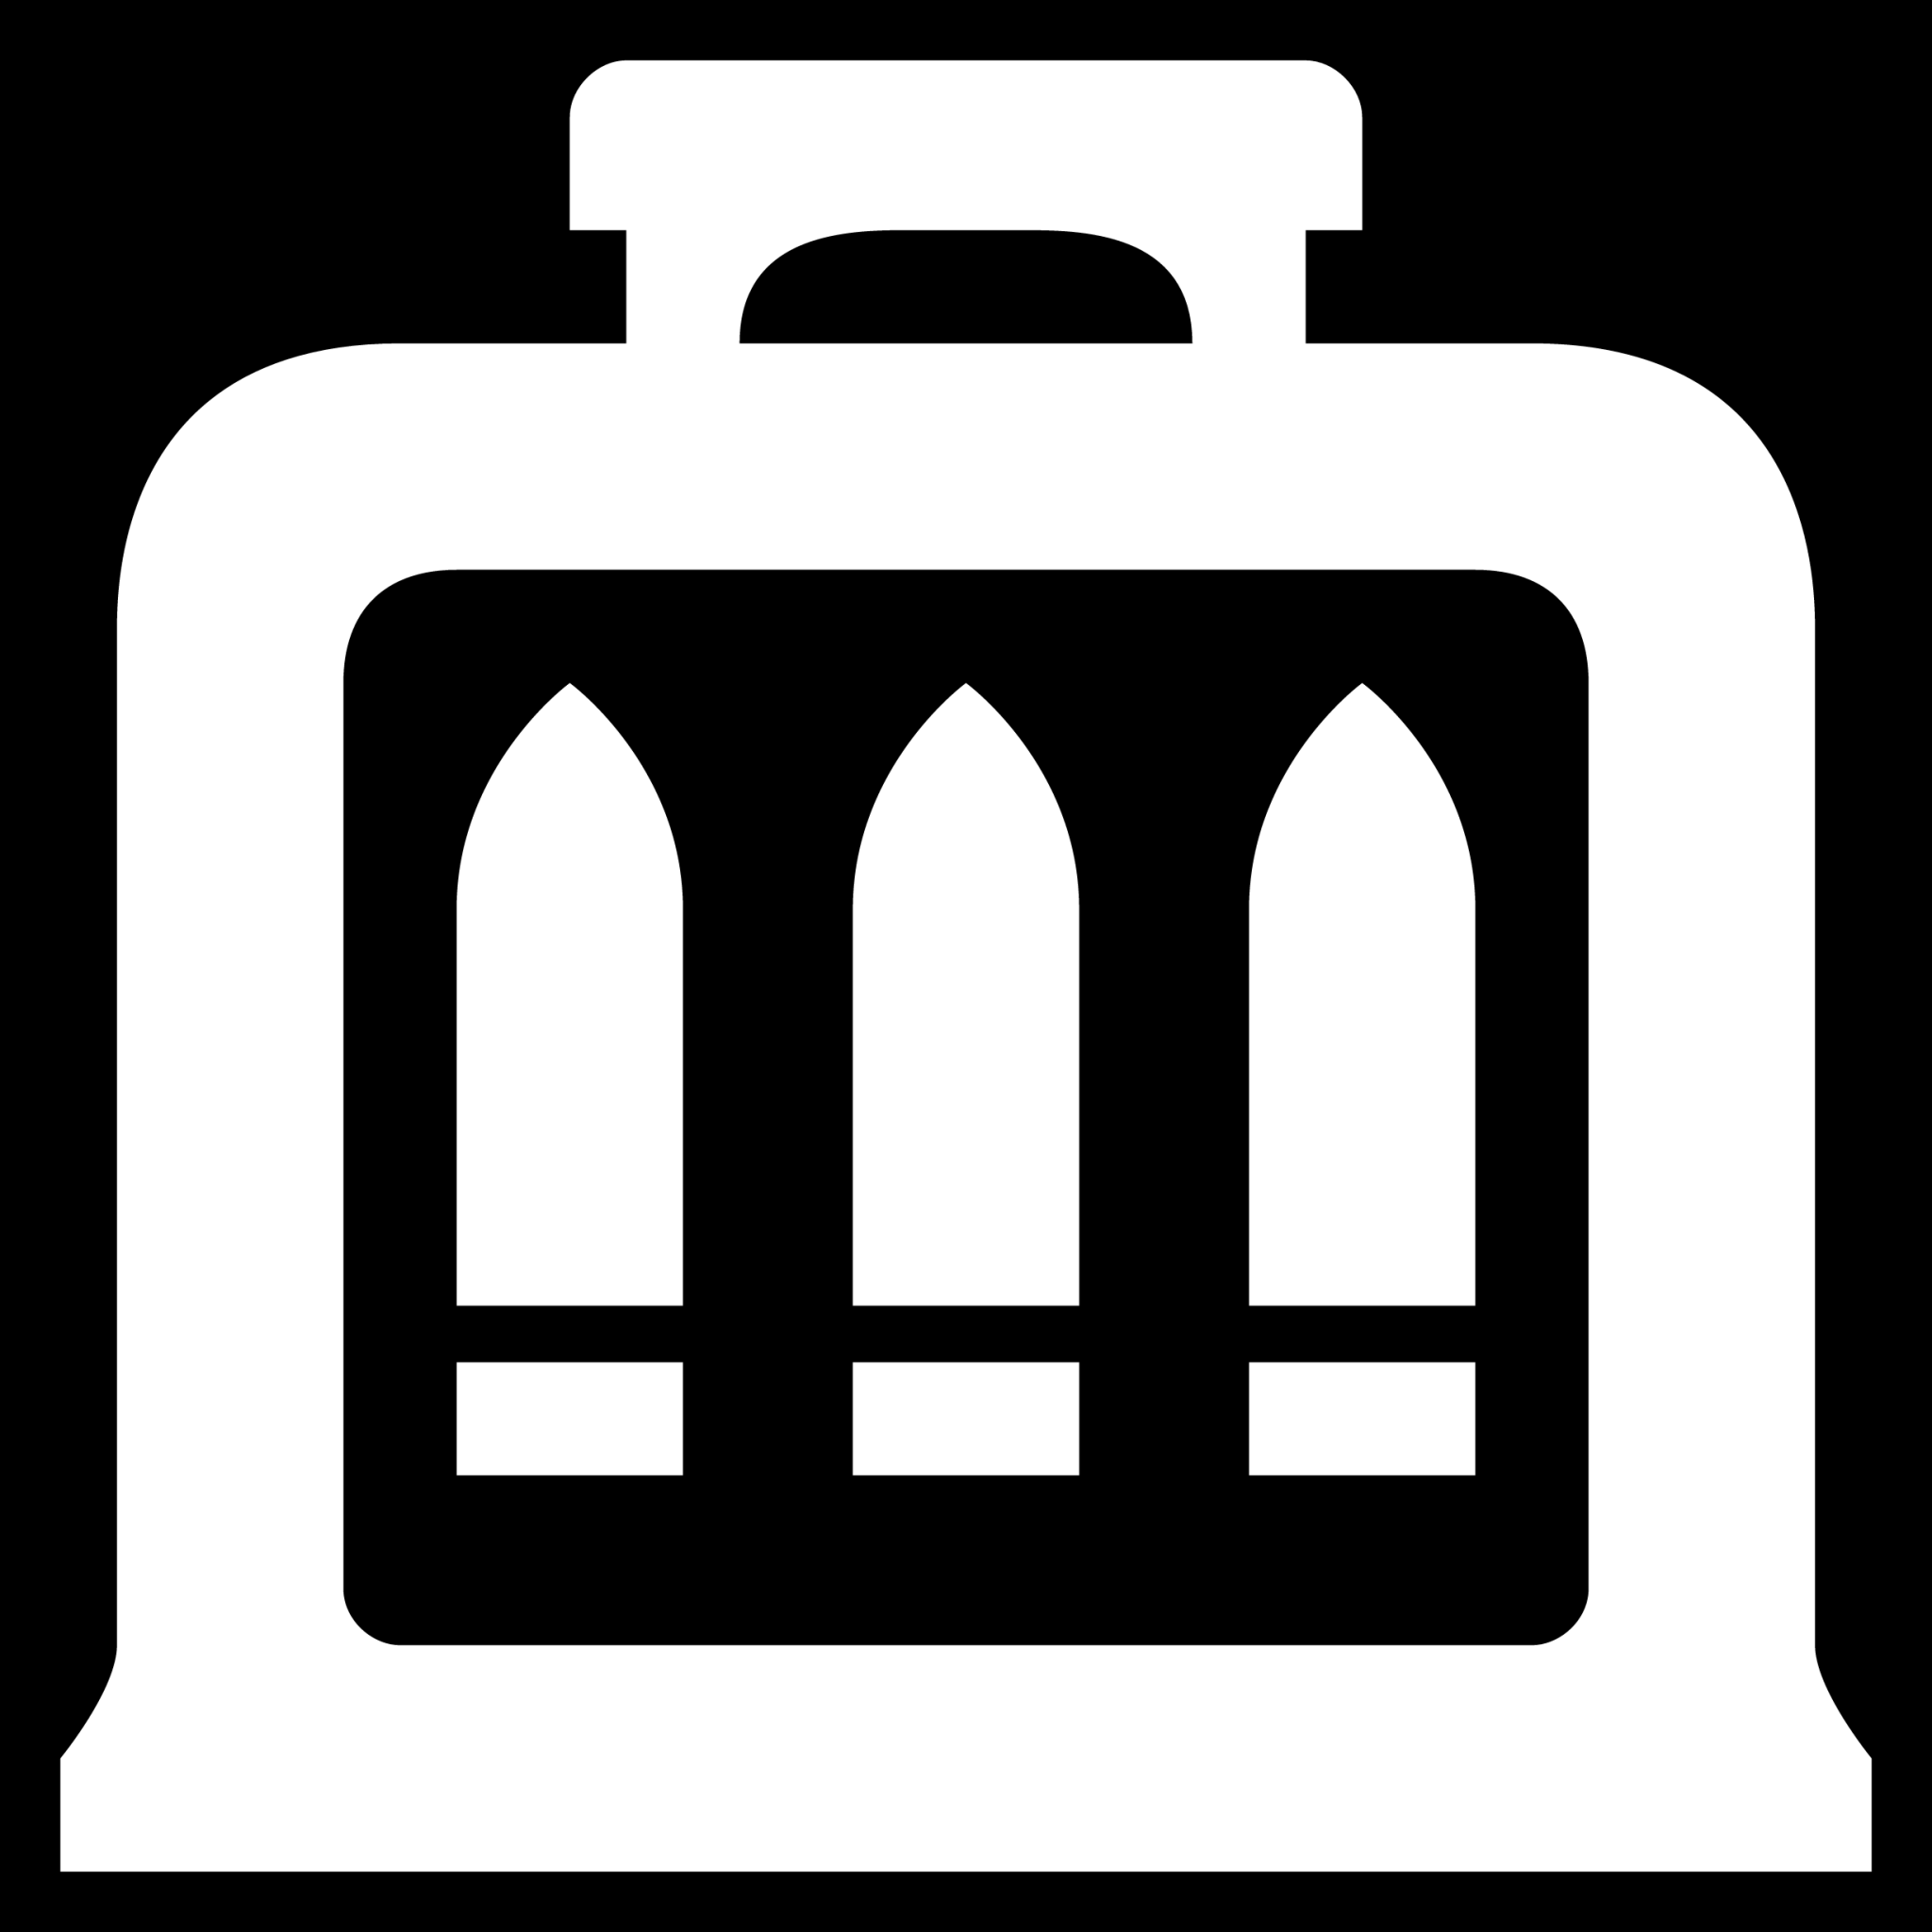 ammo box icon